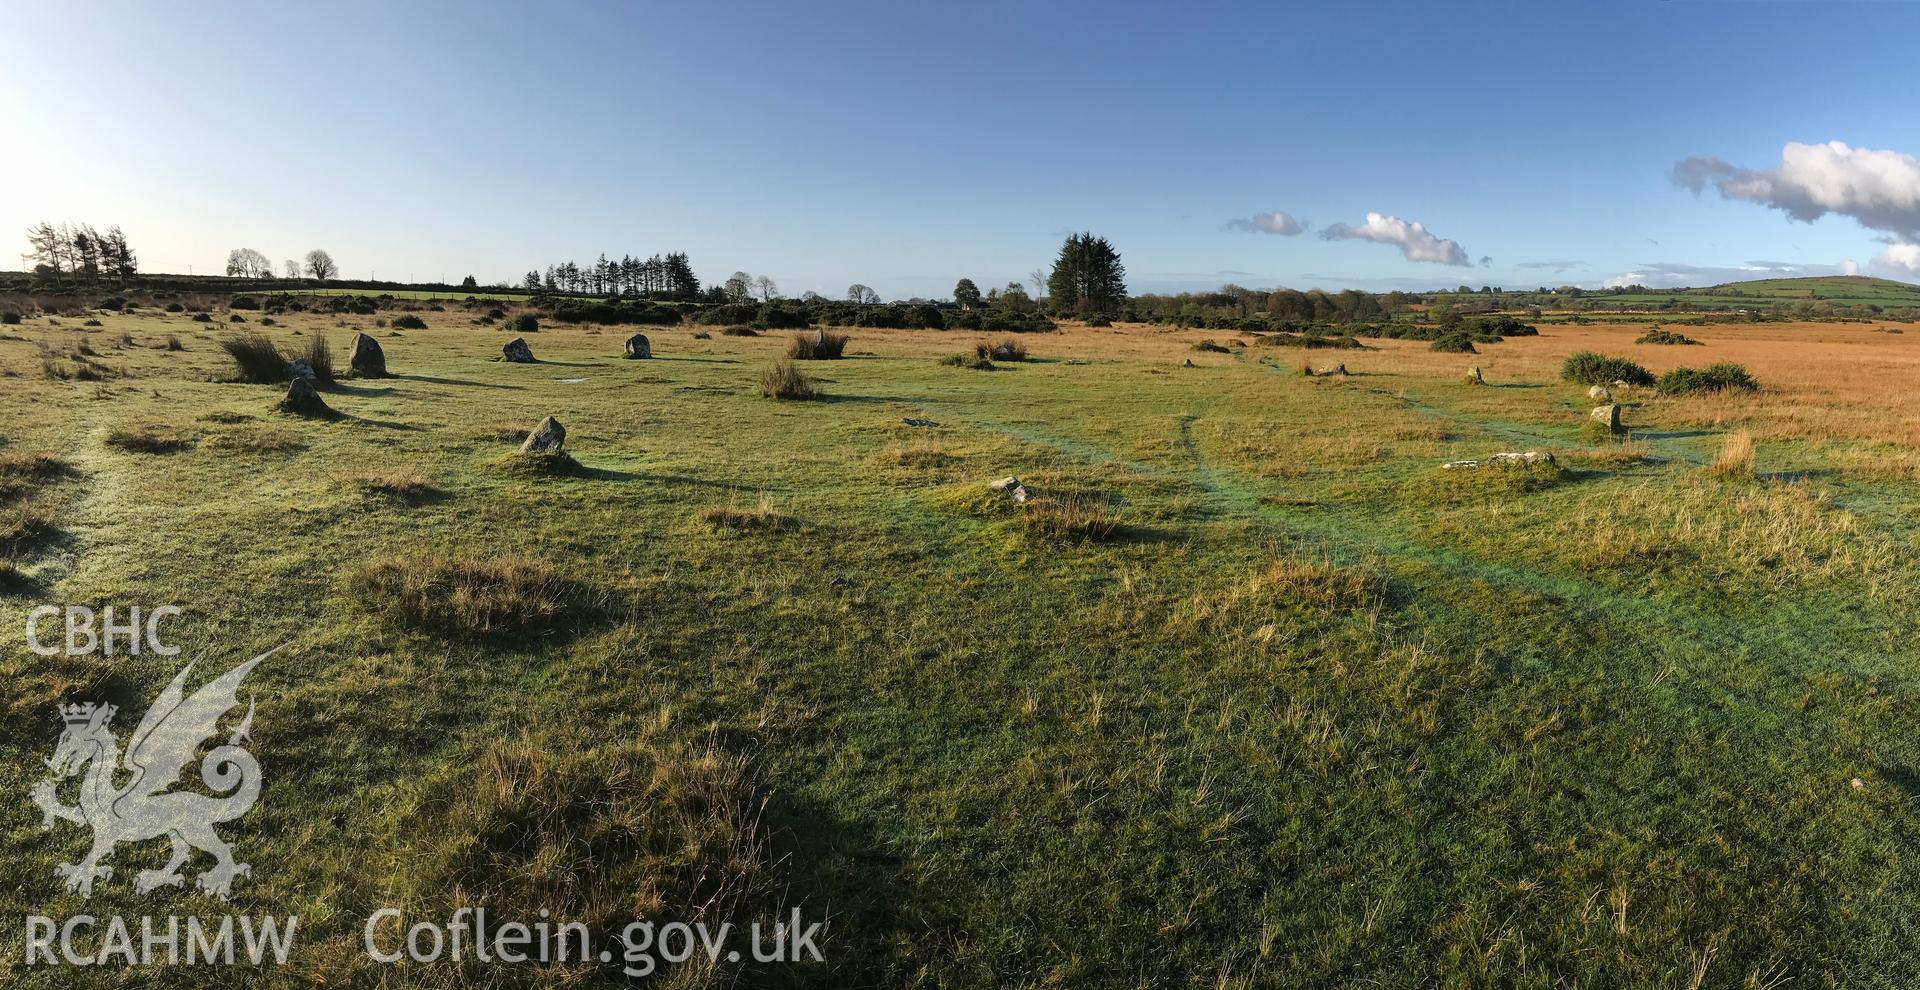 Digital colour photograph showing Gors Fawr stone circle, Mynachlog-Ddu, taken by Paul Davis on 22nd October 2019.